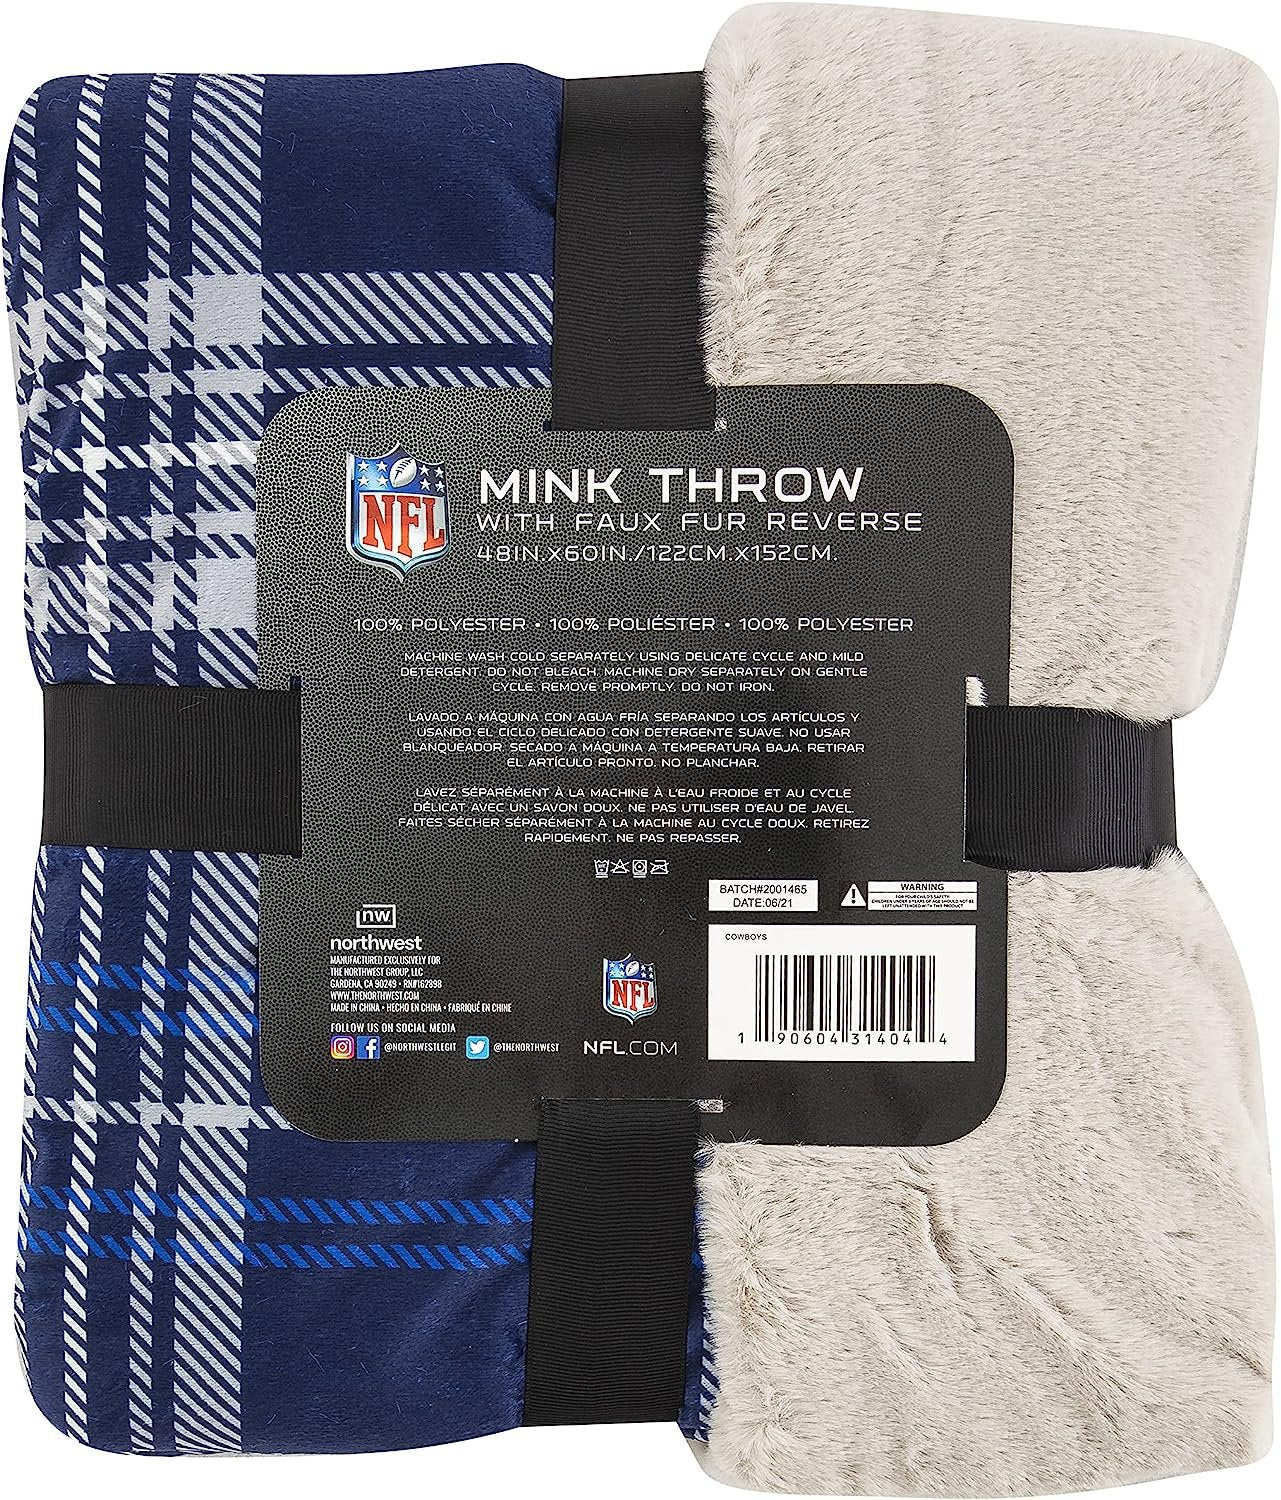 Dallas Cowboys Throw Blanket, Micro Mink Plush Fleece with Faux Fur Reverse, 48x60 Inch